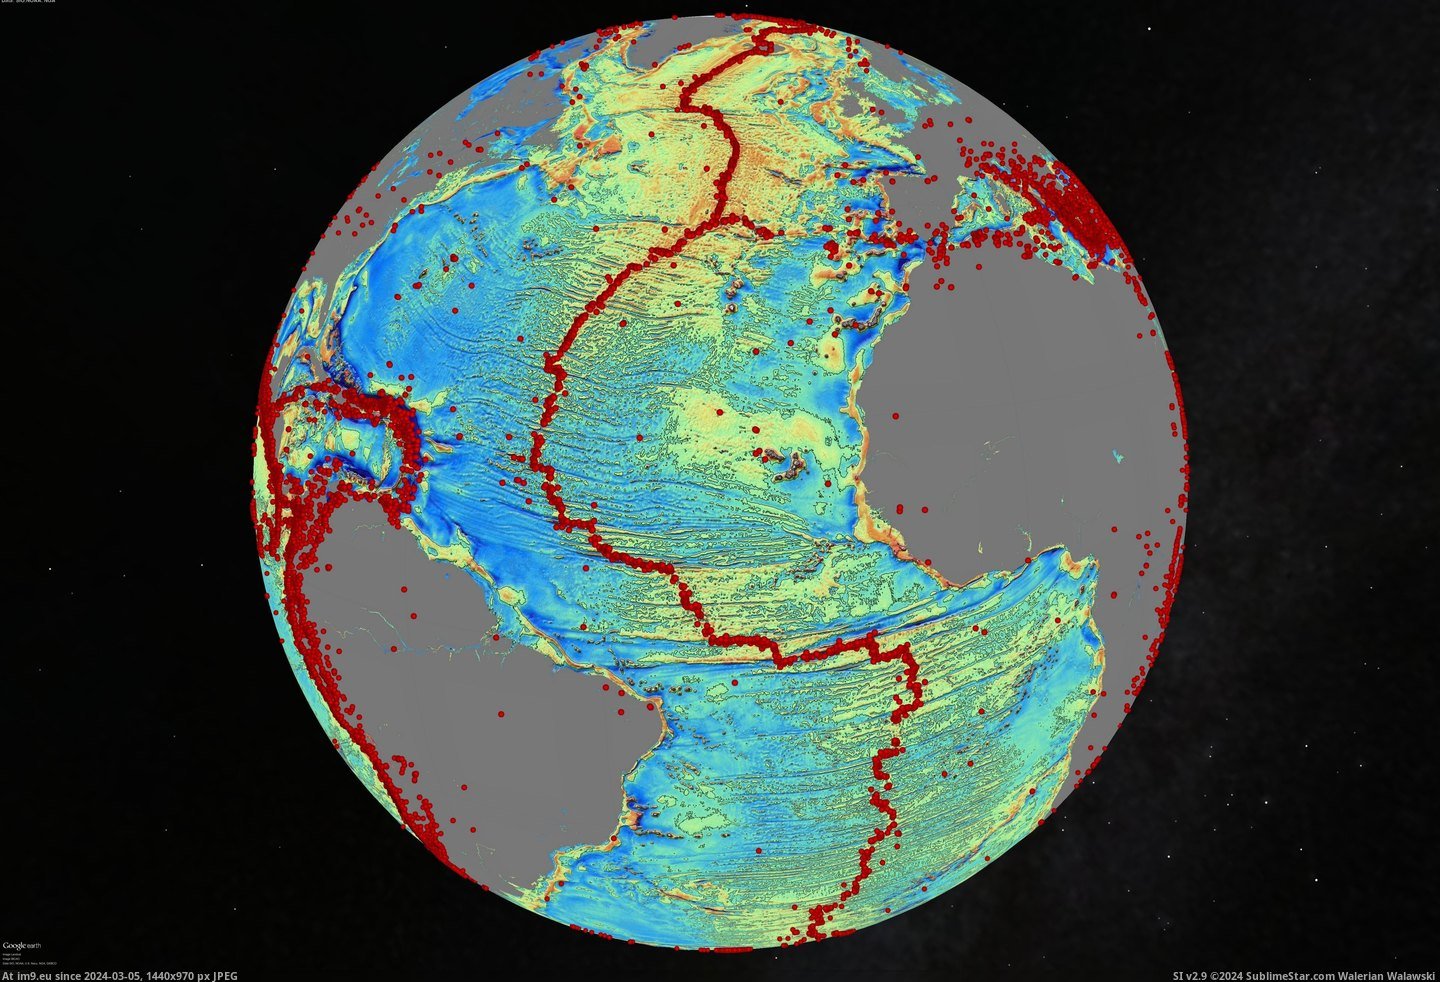 #Model #North #Atlantic #Marine #Gravity [Mapporn] Marine gravity model of the North Atlantic [4800x3244] Pic. (Image of album My r/MAPS favs))